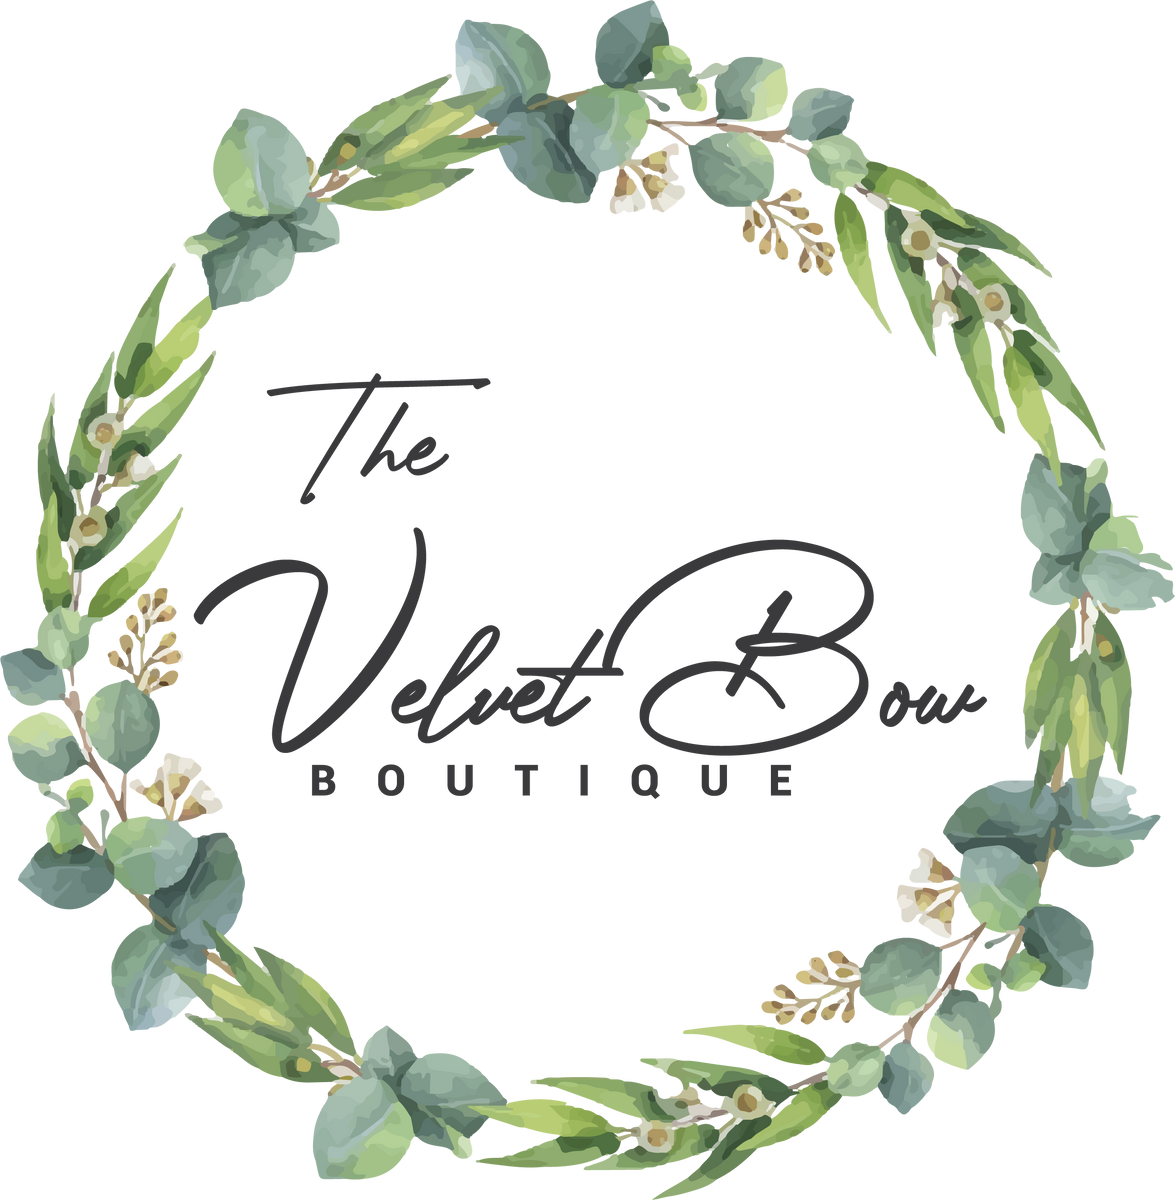 The Velvet Bow Boutique